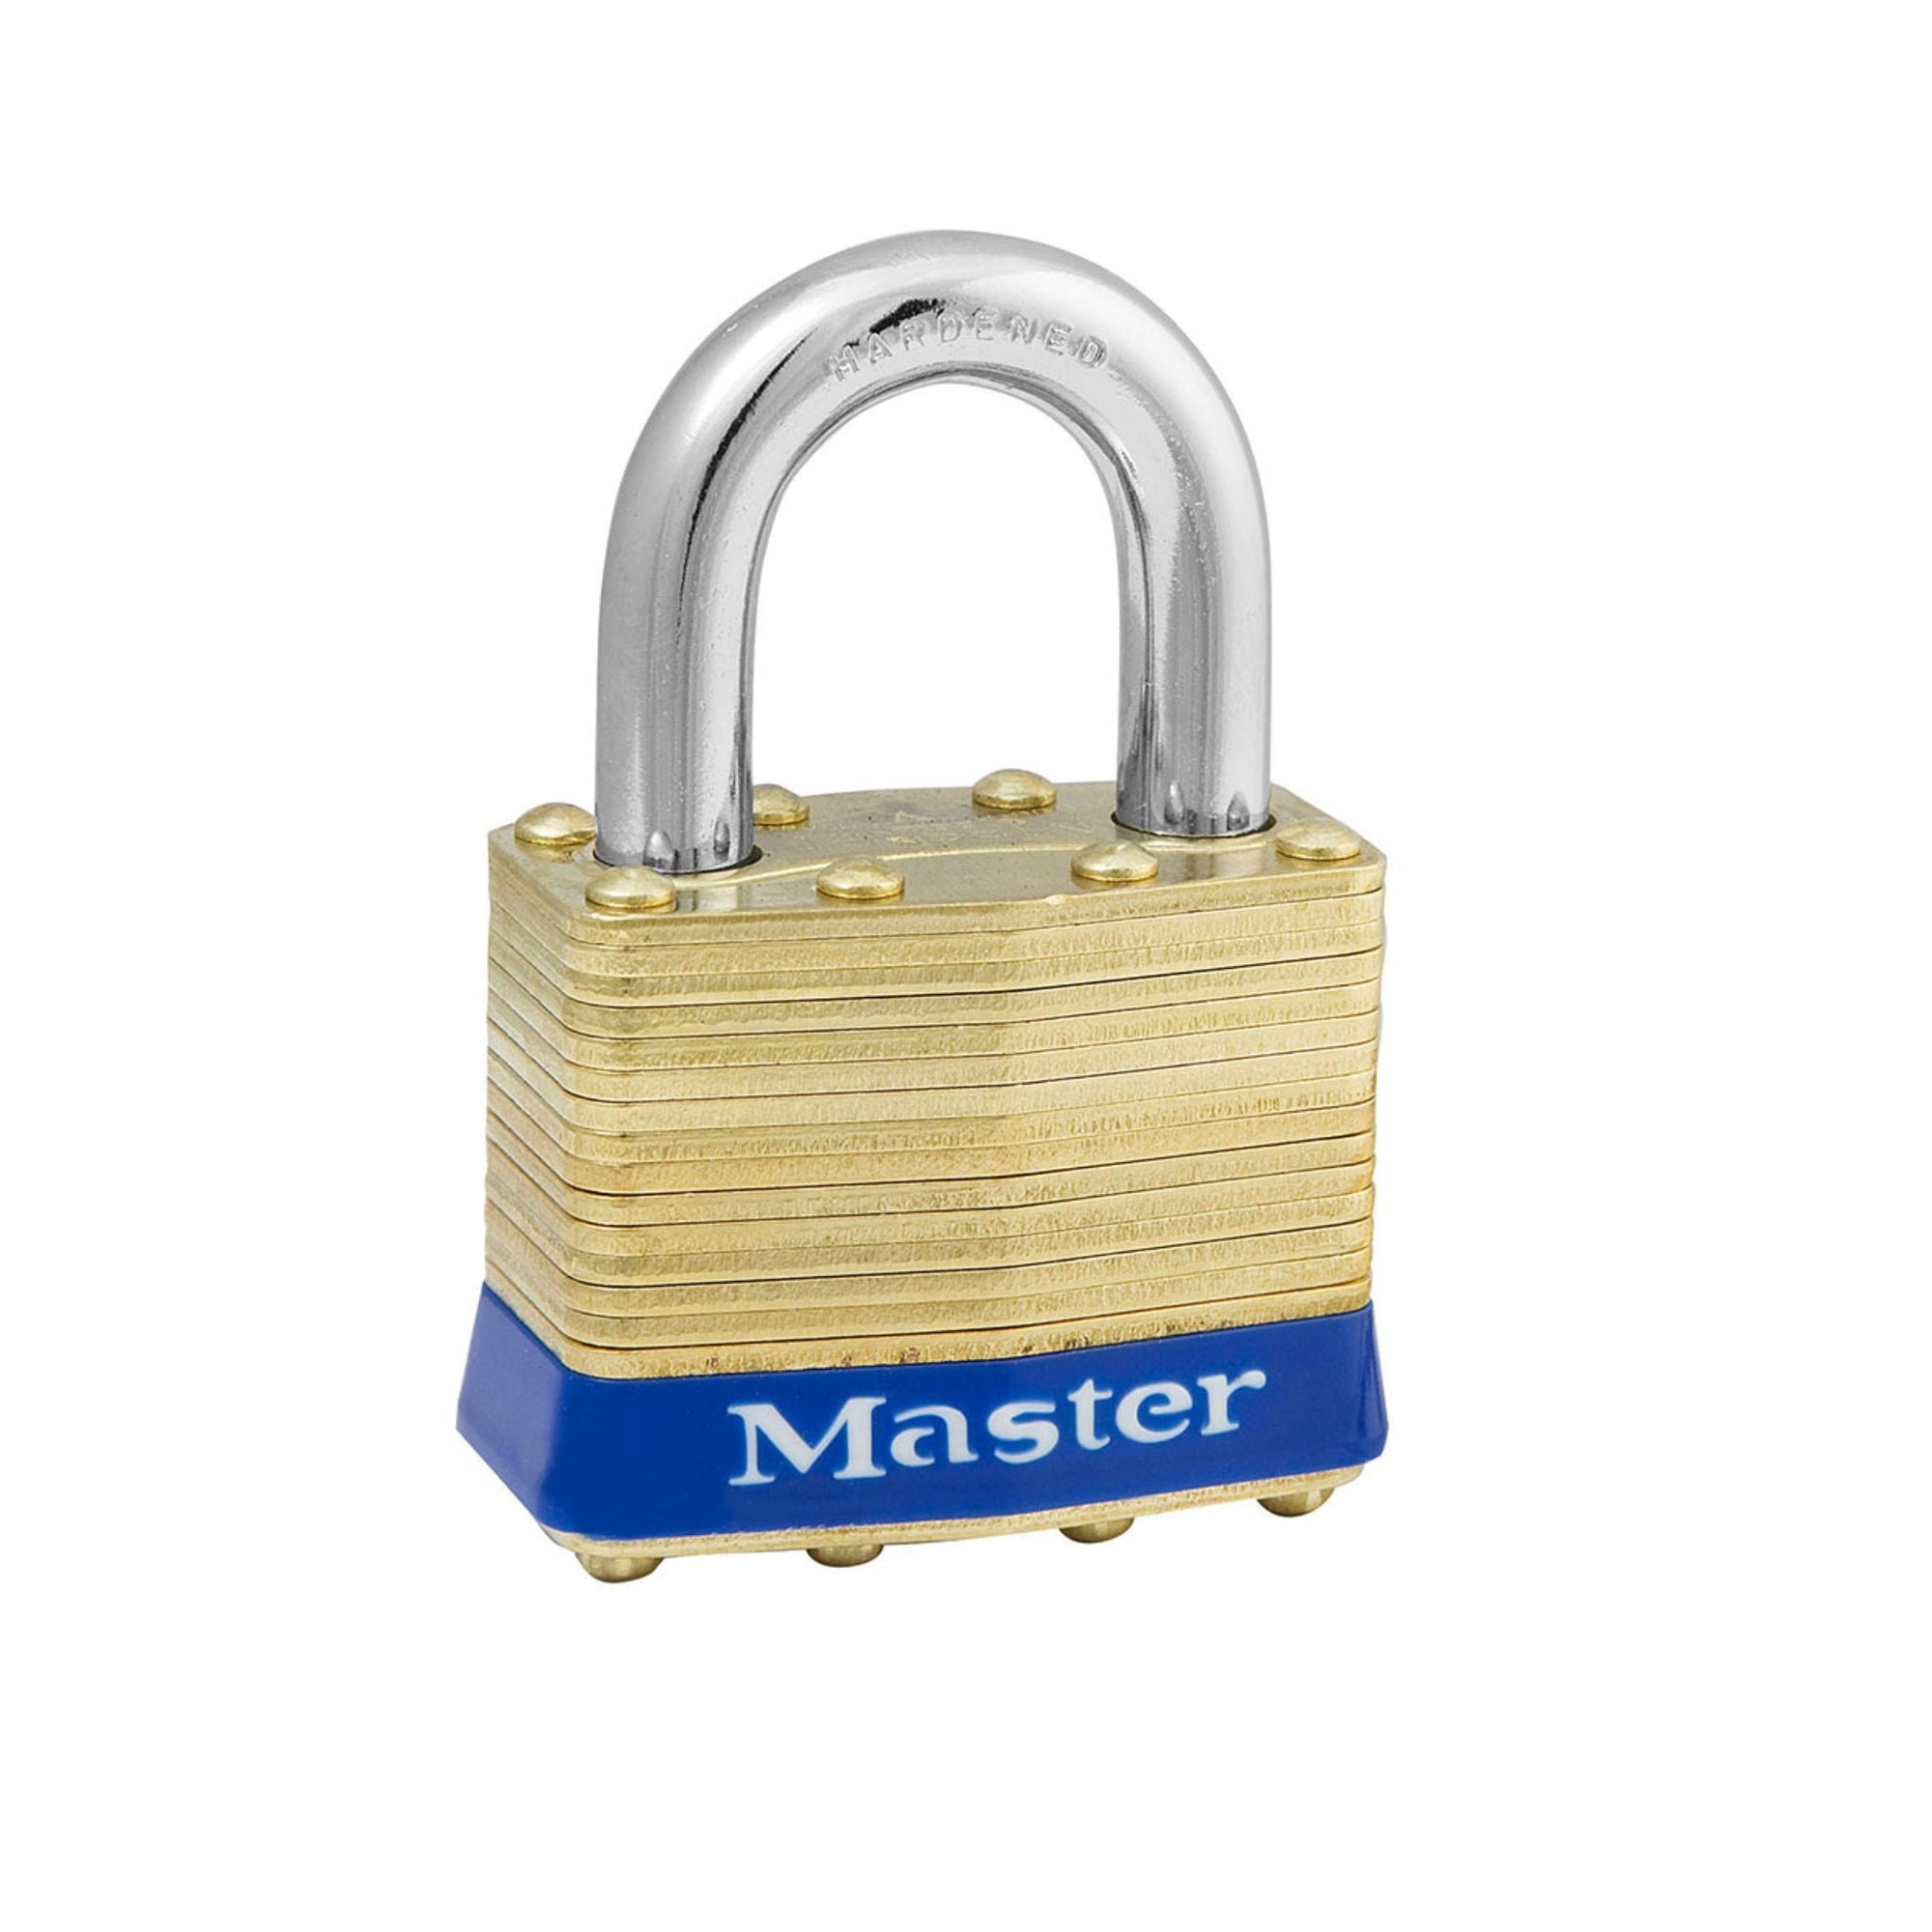 Master Lock 2KA 0309 Lock Laminated brass No. 2 Series Padlock Keyed to Match Existing Key Number KA0309 - The Lock Source